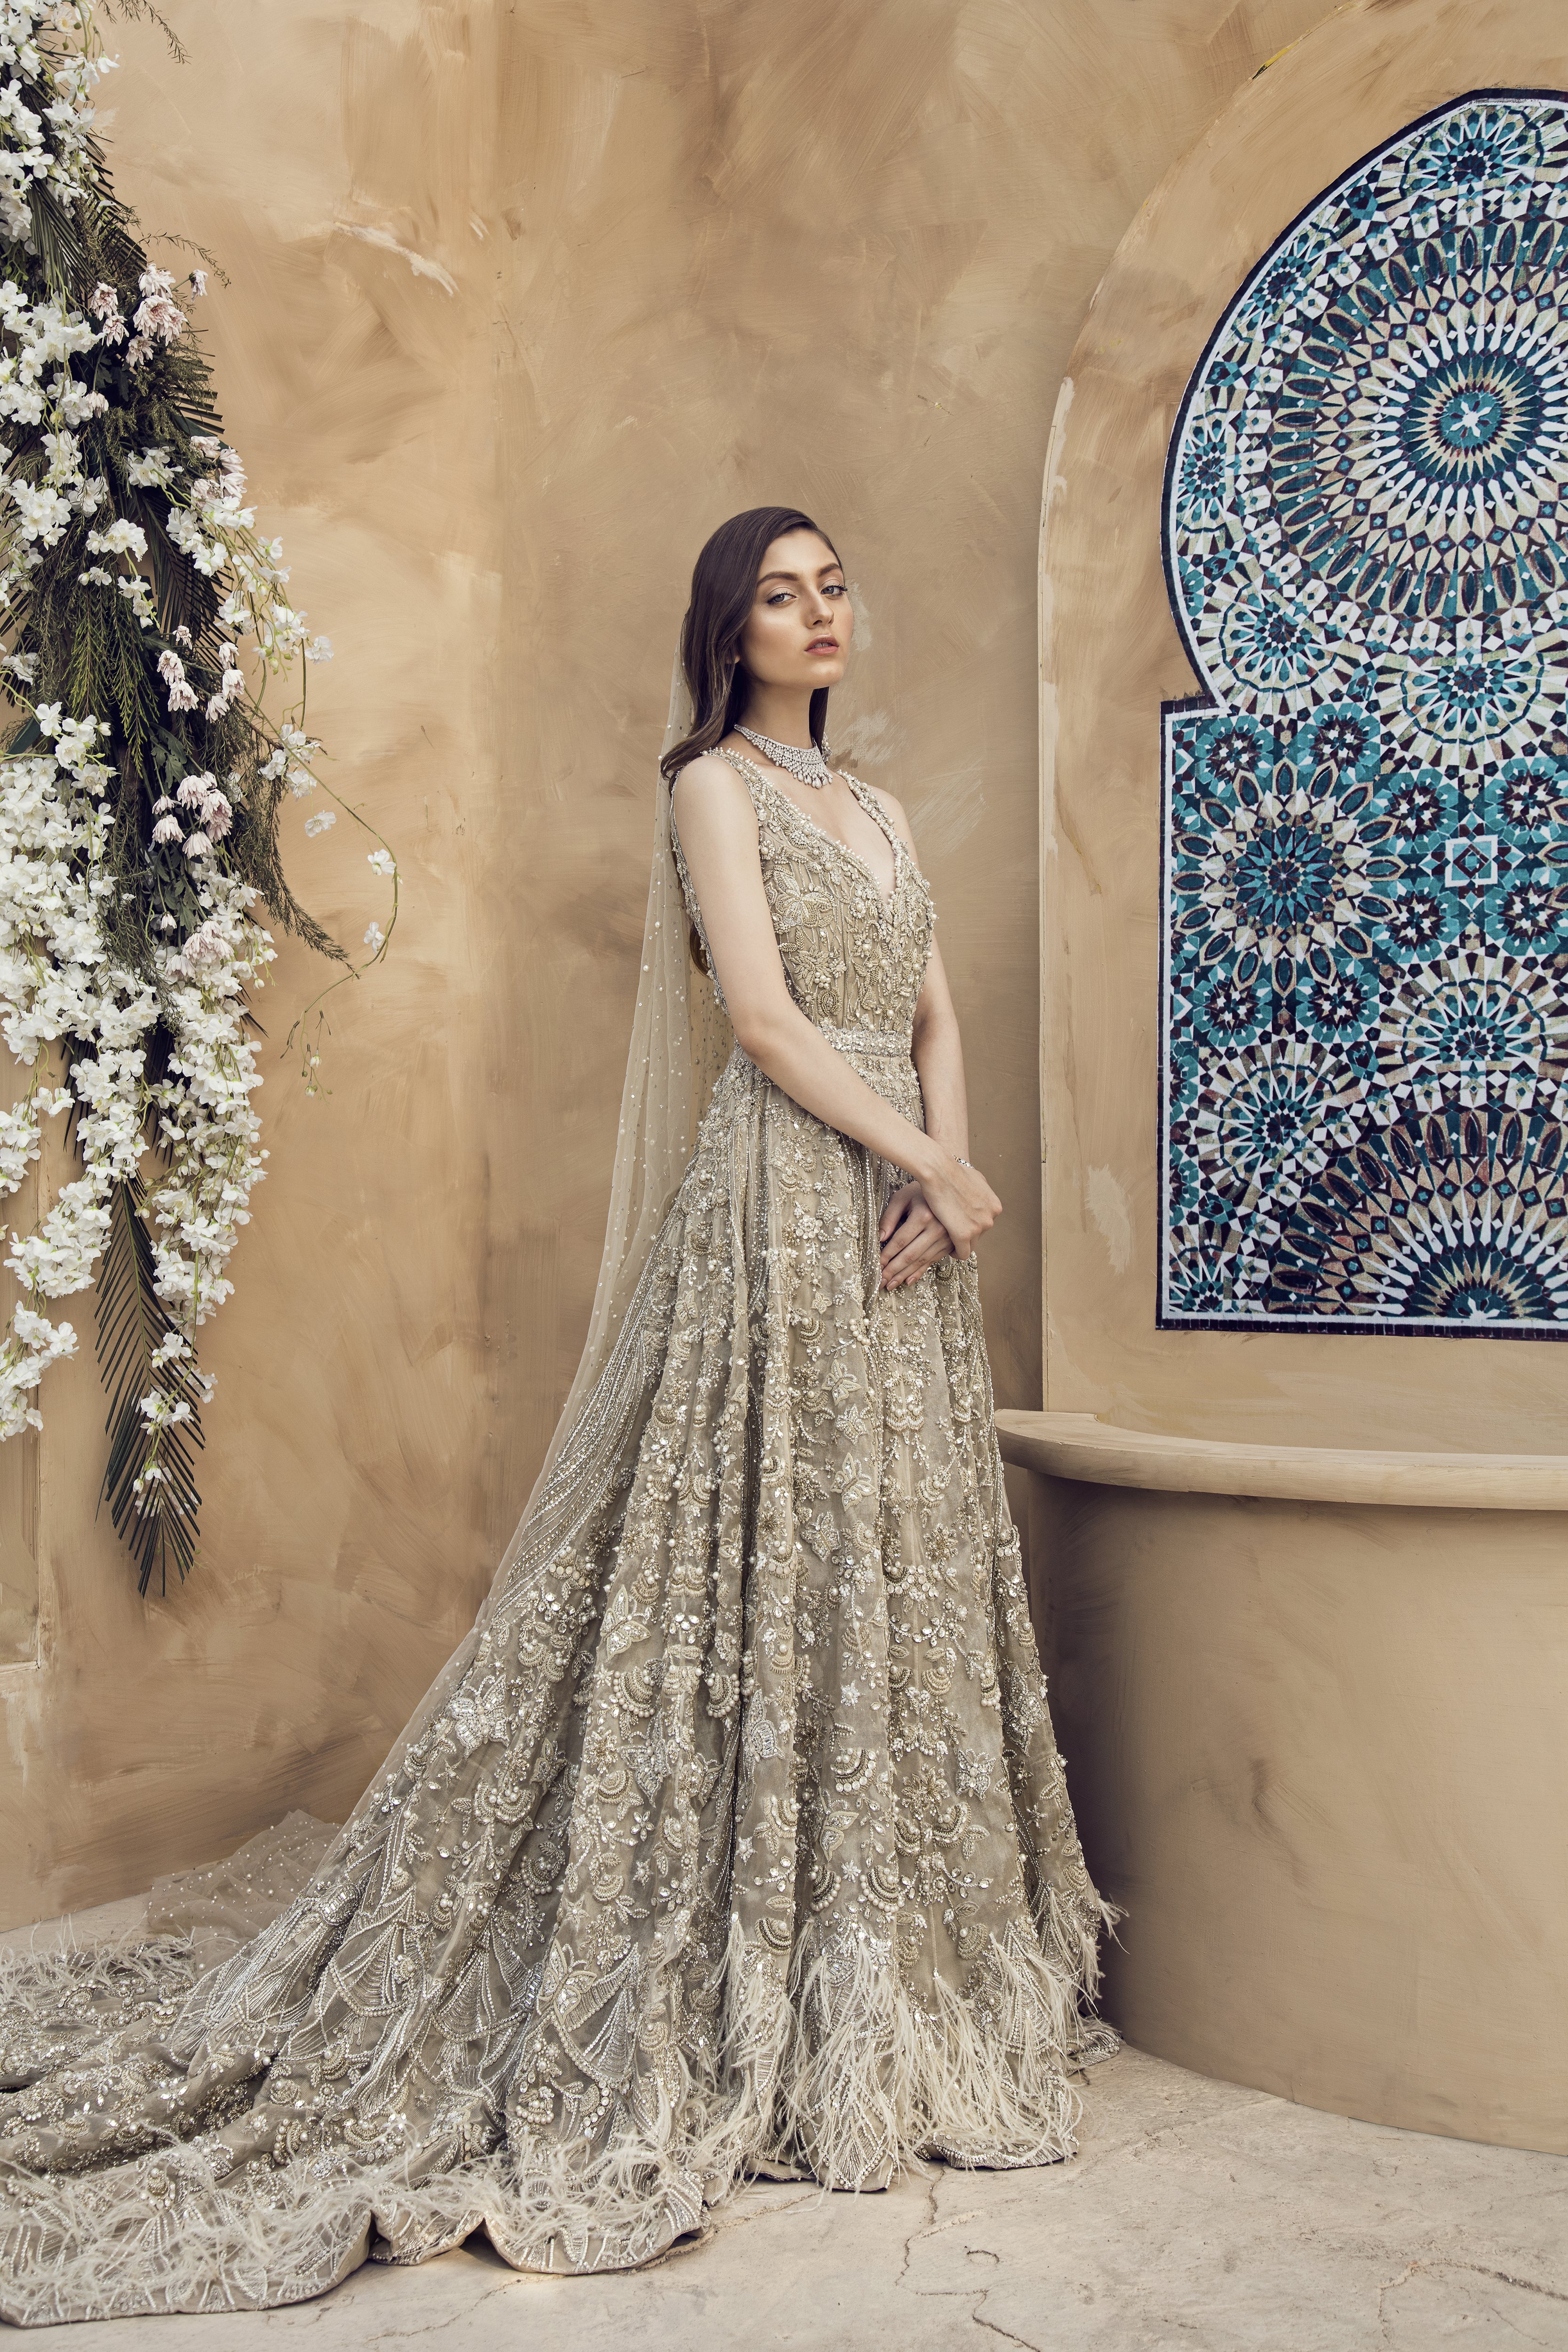 Buy this elegant Pakistani wedding dress by Pakistani fashion designers at a decent price